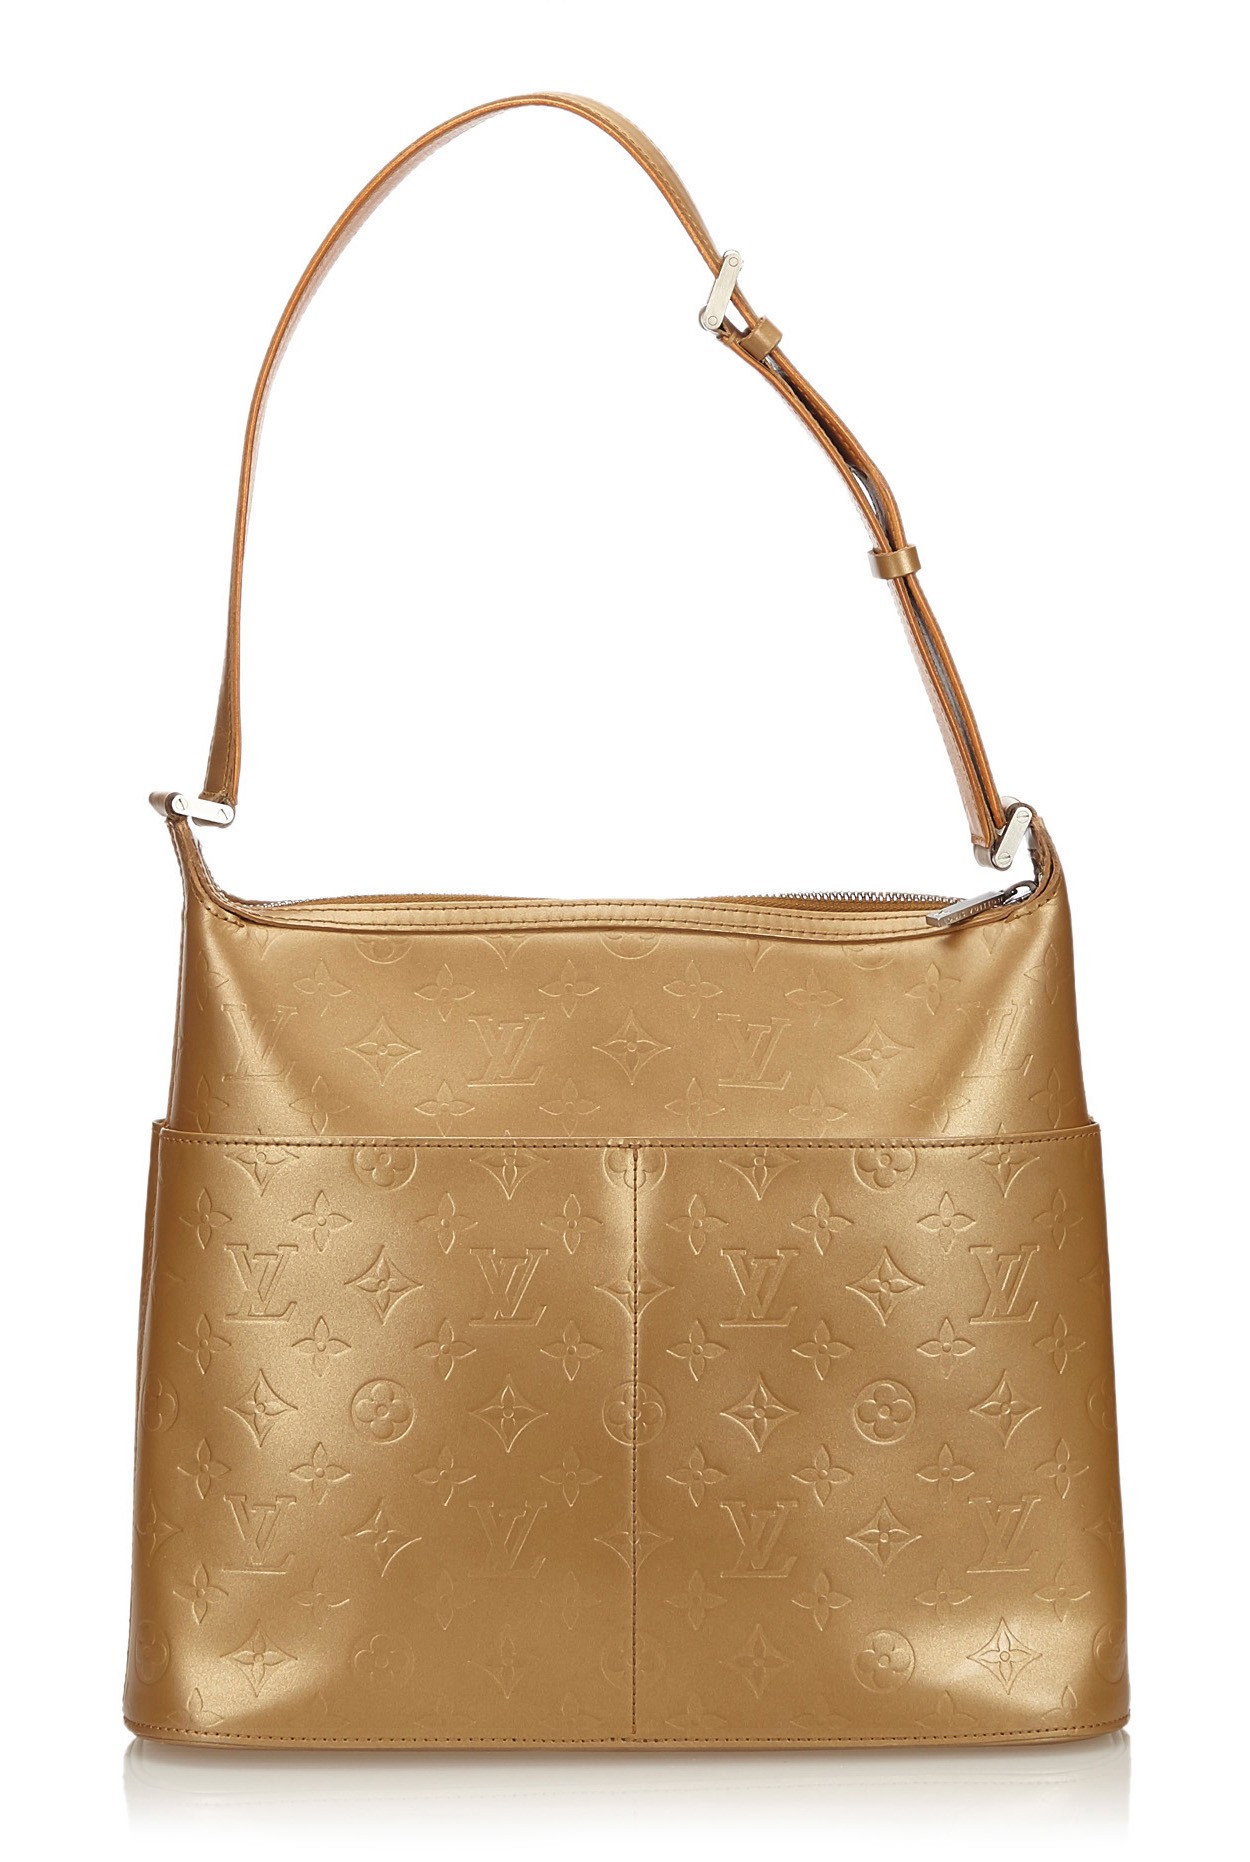 Louis Vuitton Monogram Vernis Leather Handbag